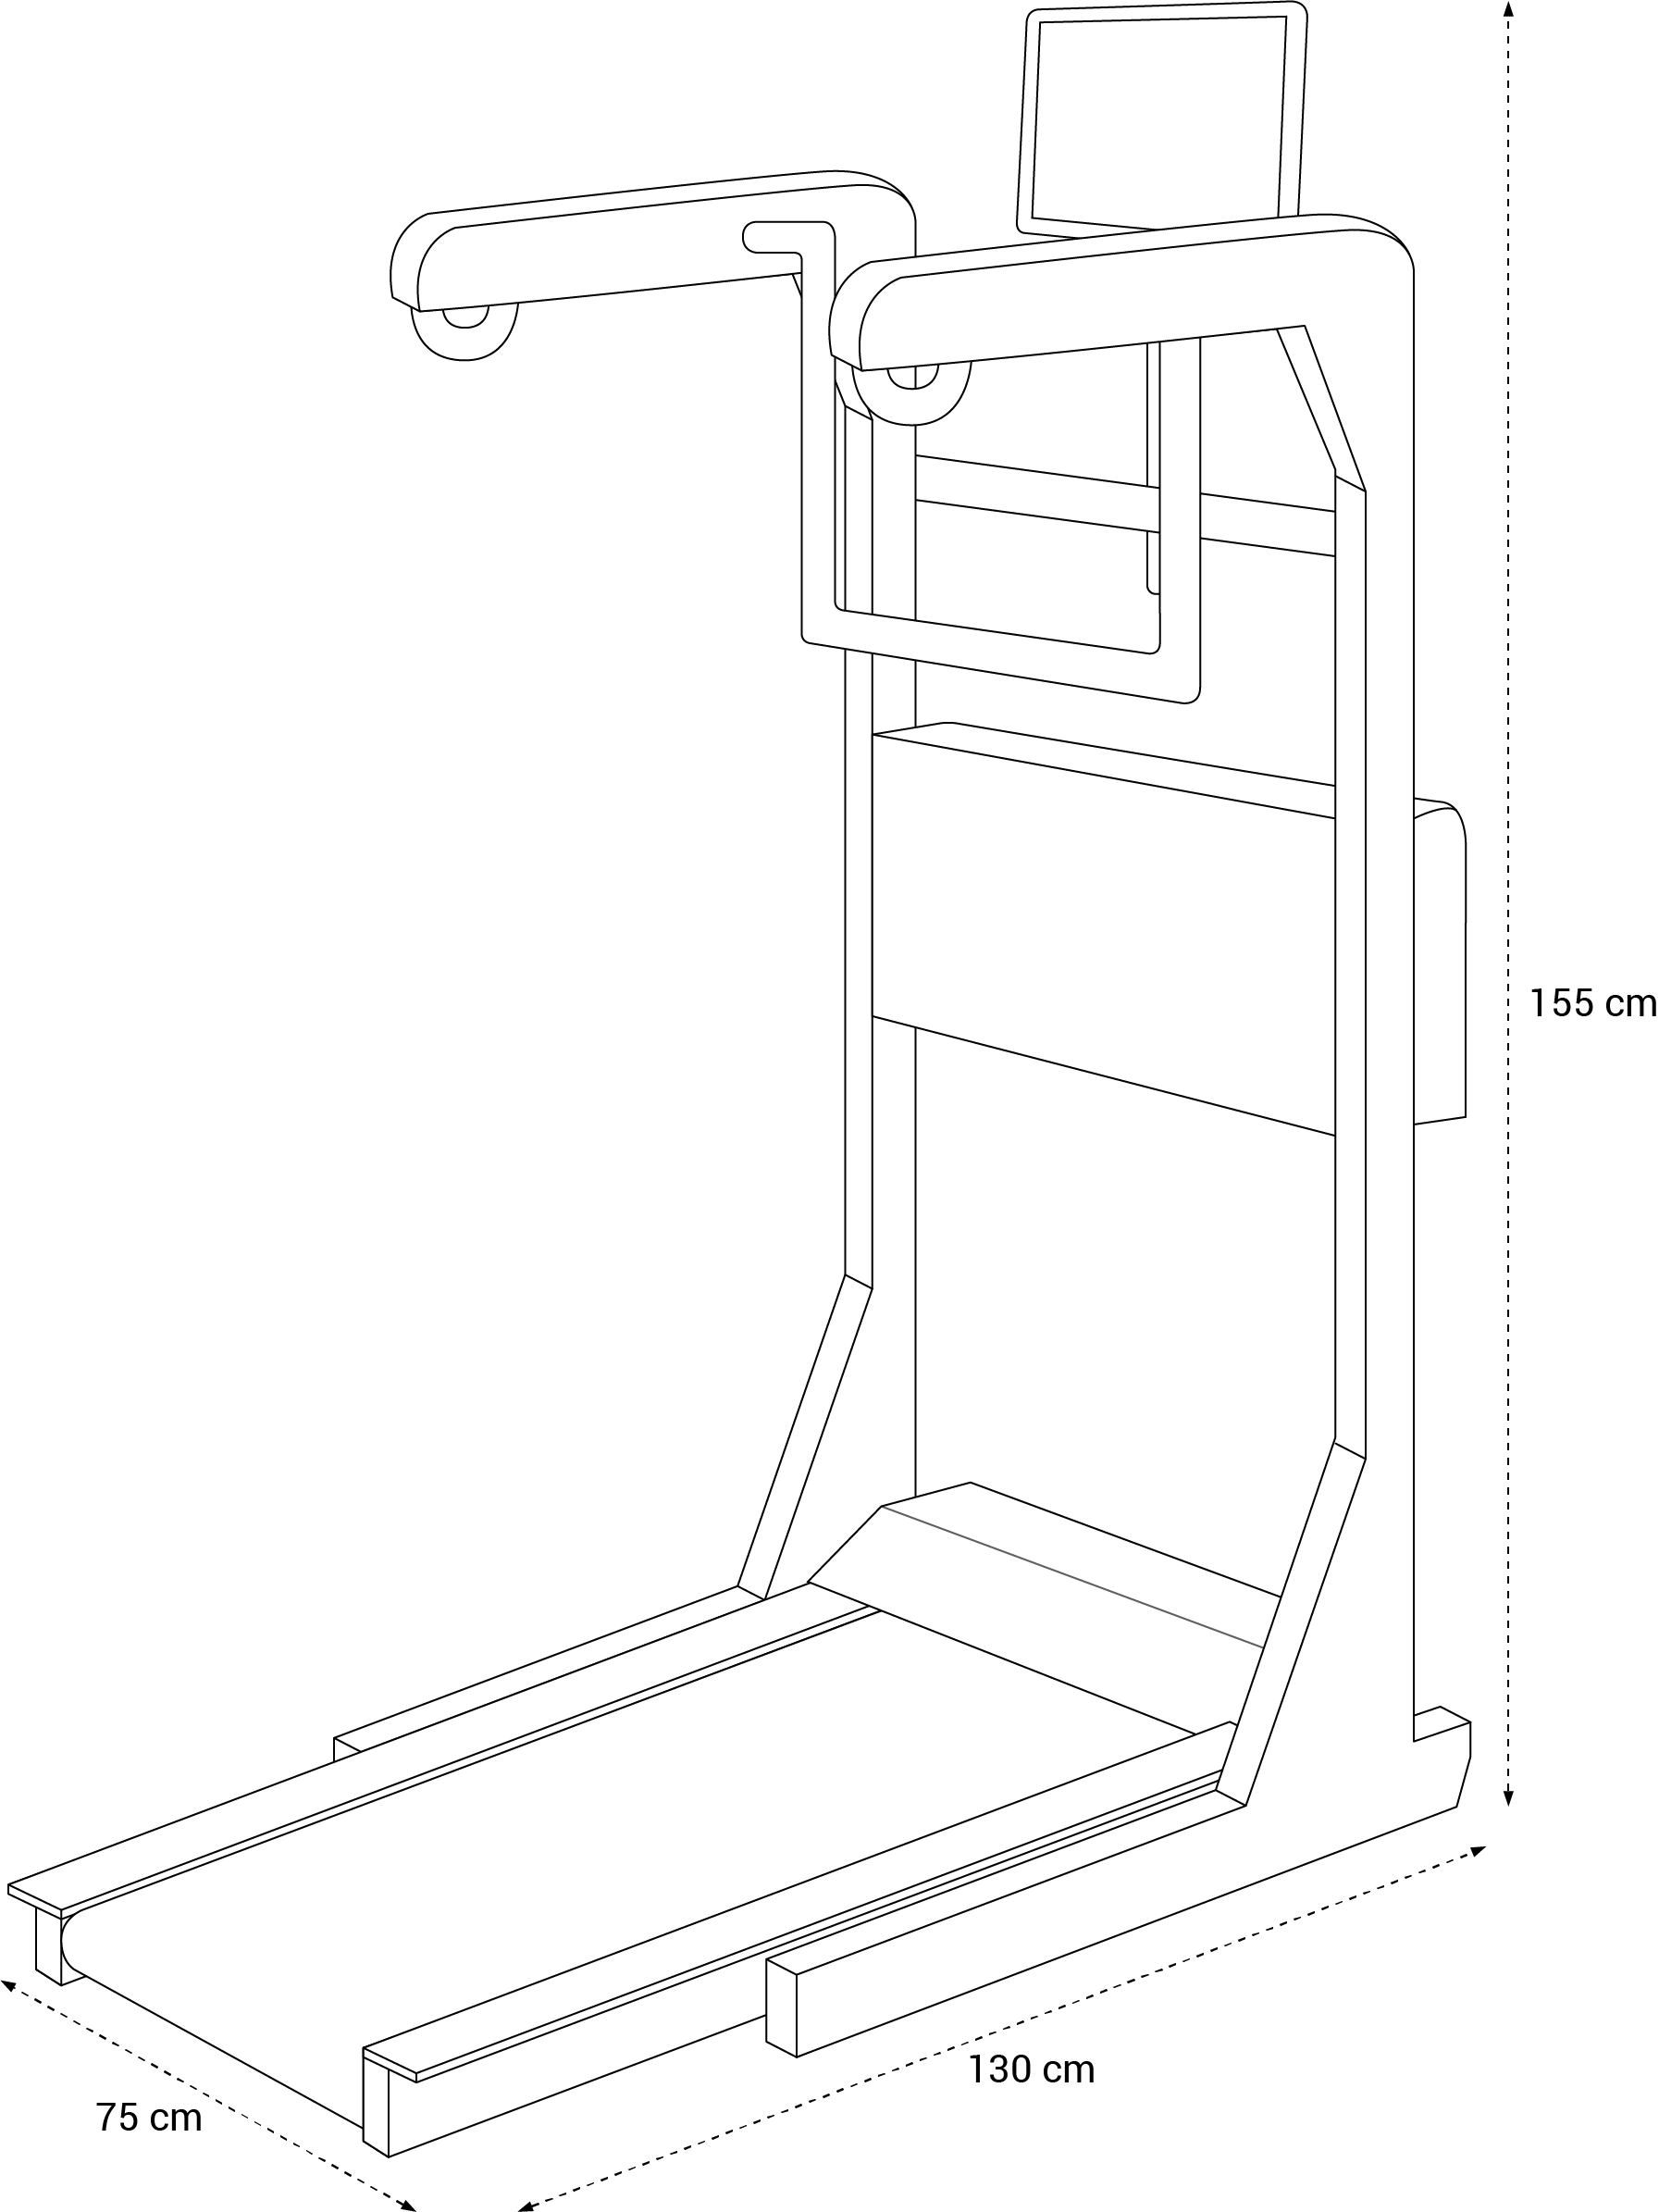 Dimensions of Ema treadmill